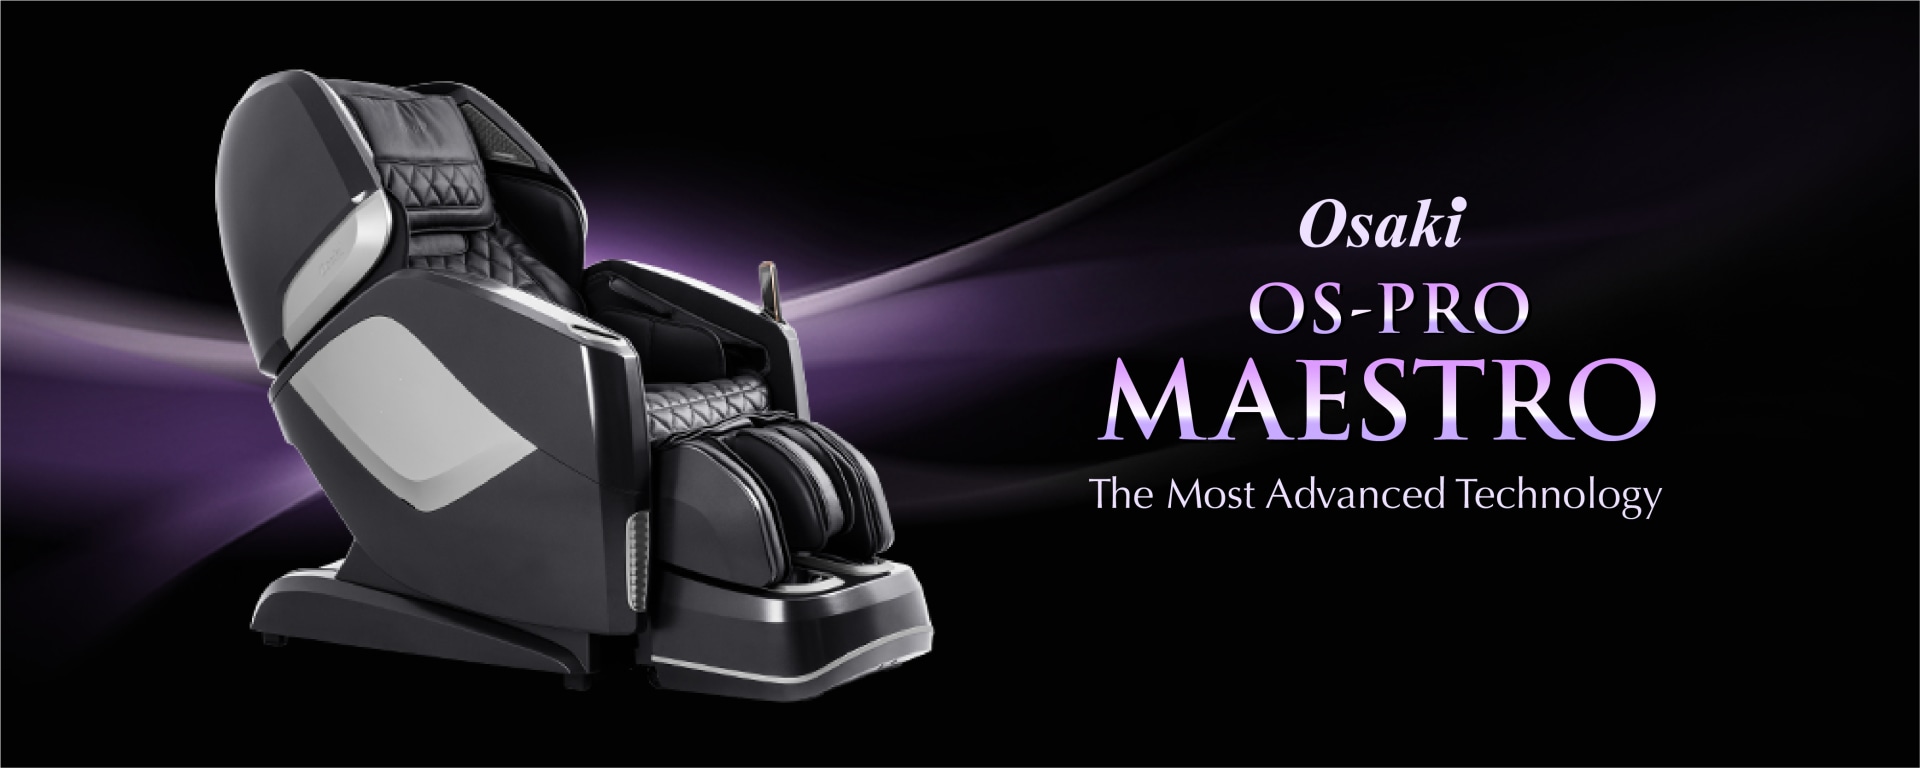 Osaki OS-4D Pro Maestro Massage Chair 27% off ($1,900 savings) starting 01/09/23